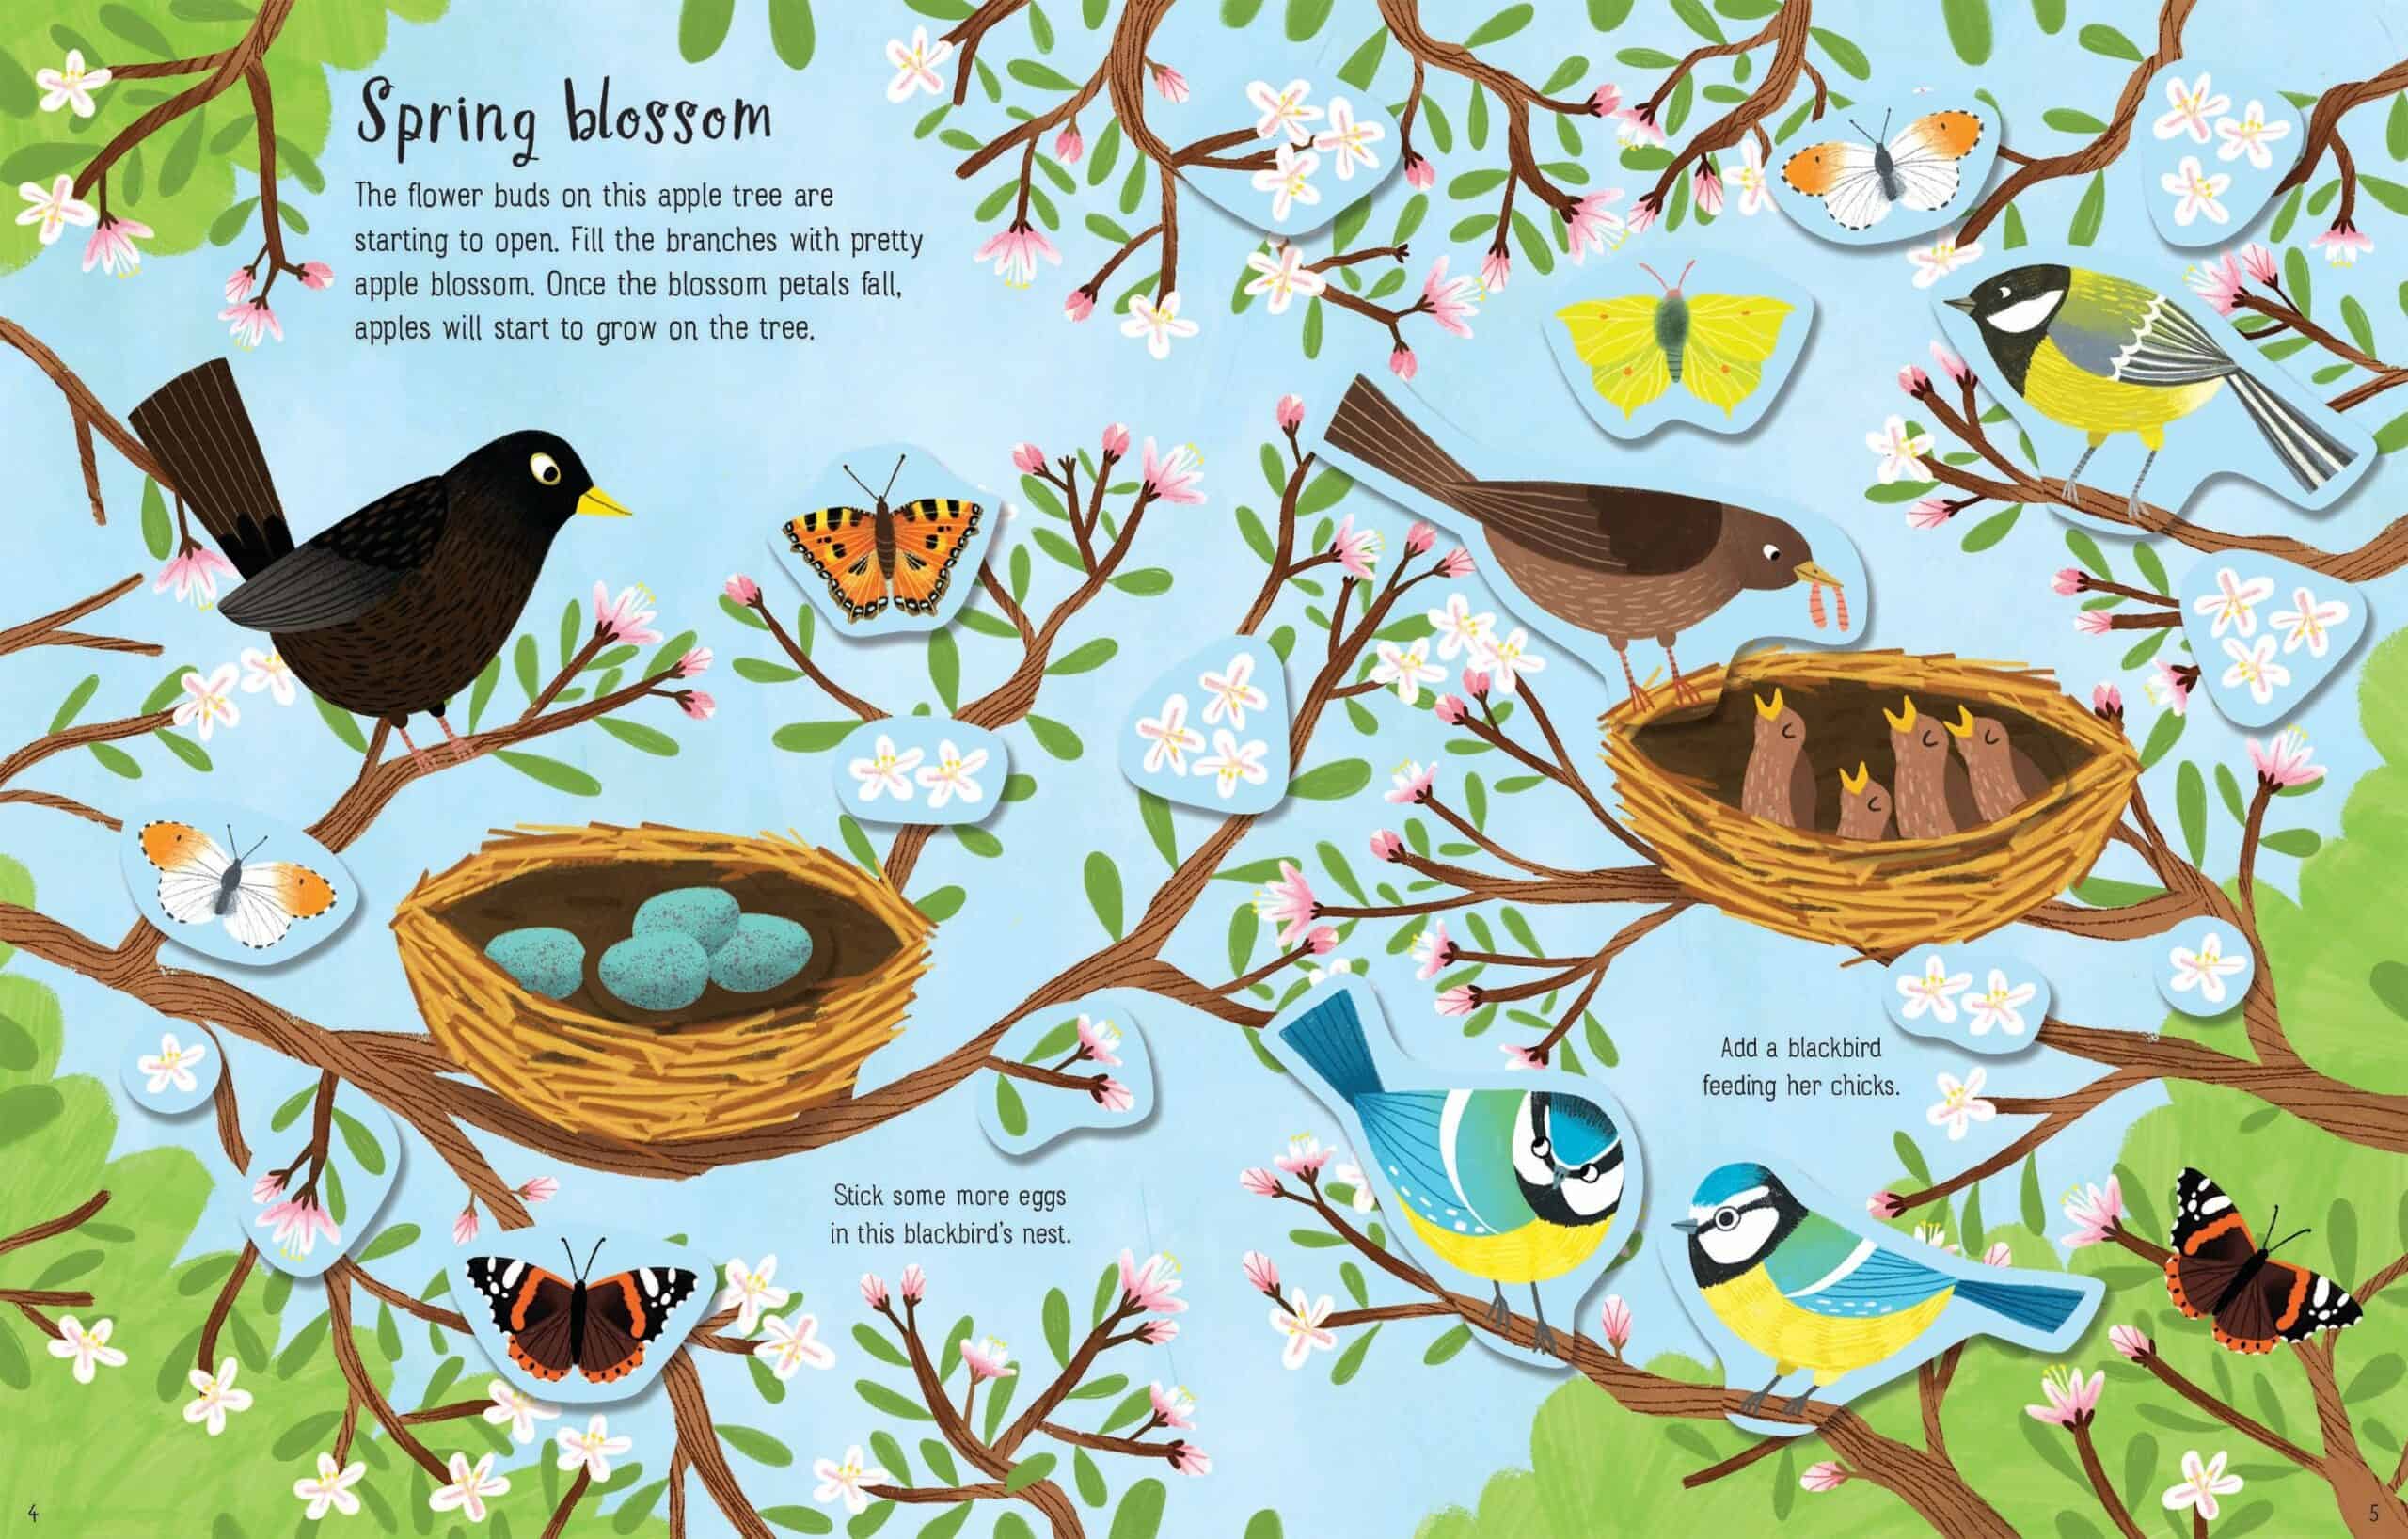 Carte pentru copii - First Sticker Book Seasons